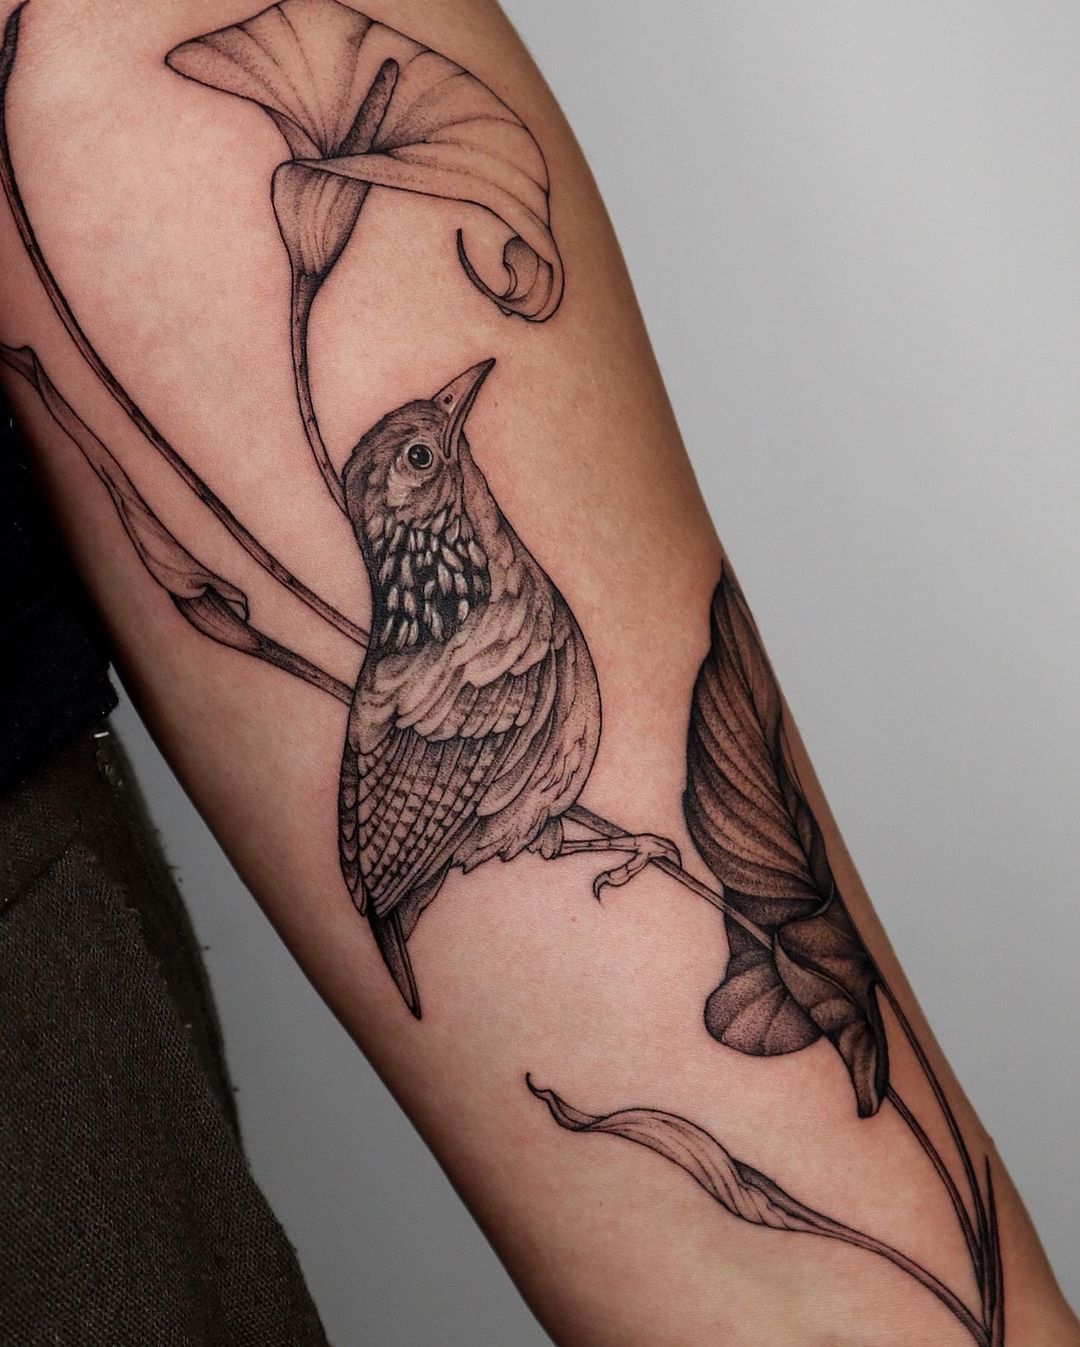 Birds tattoo for men by chrisrozza